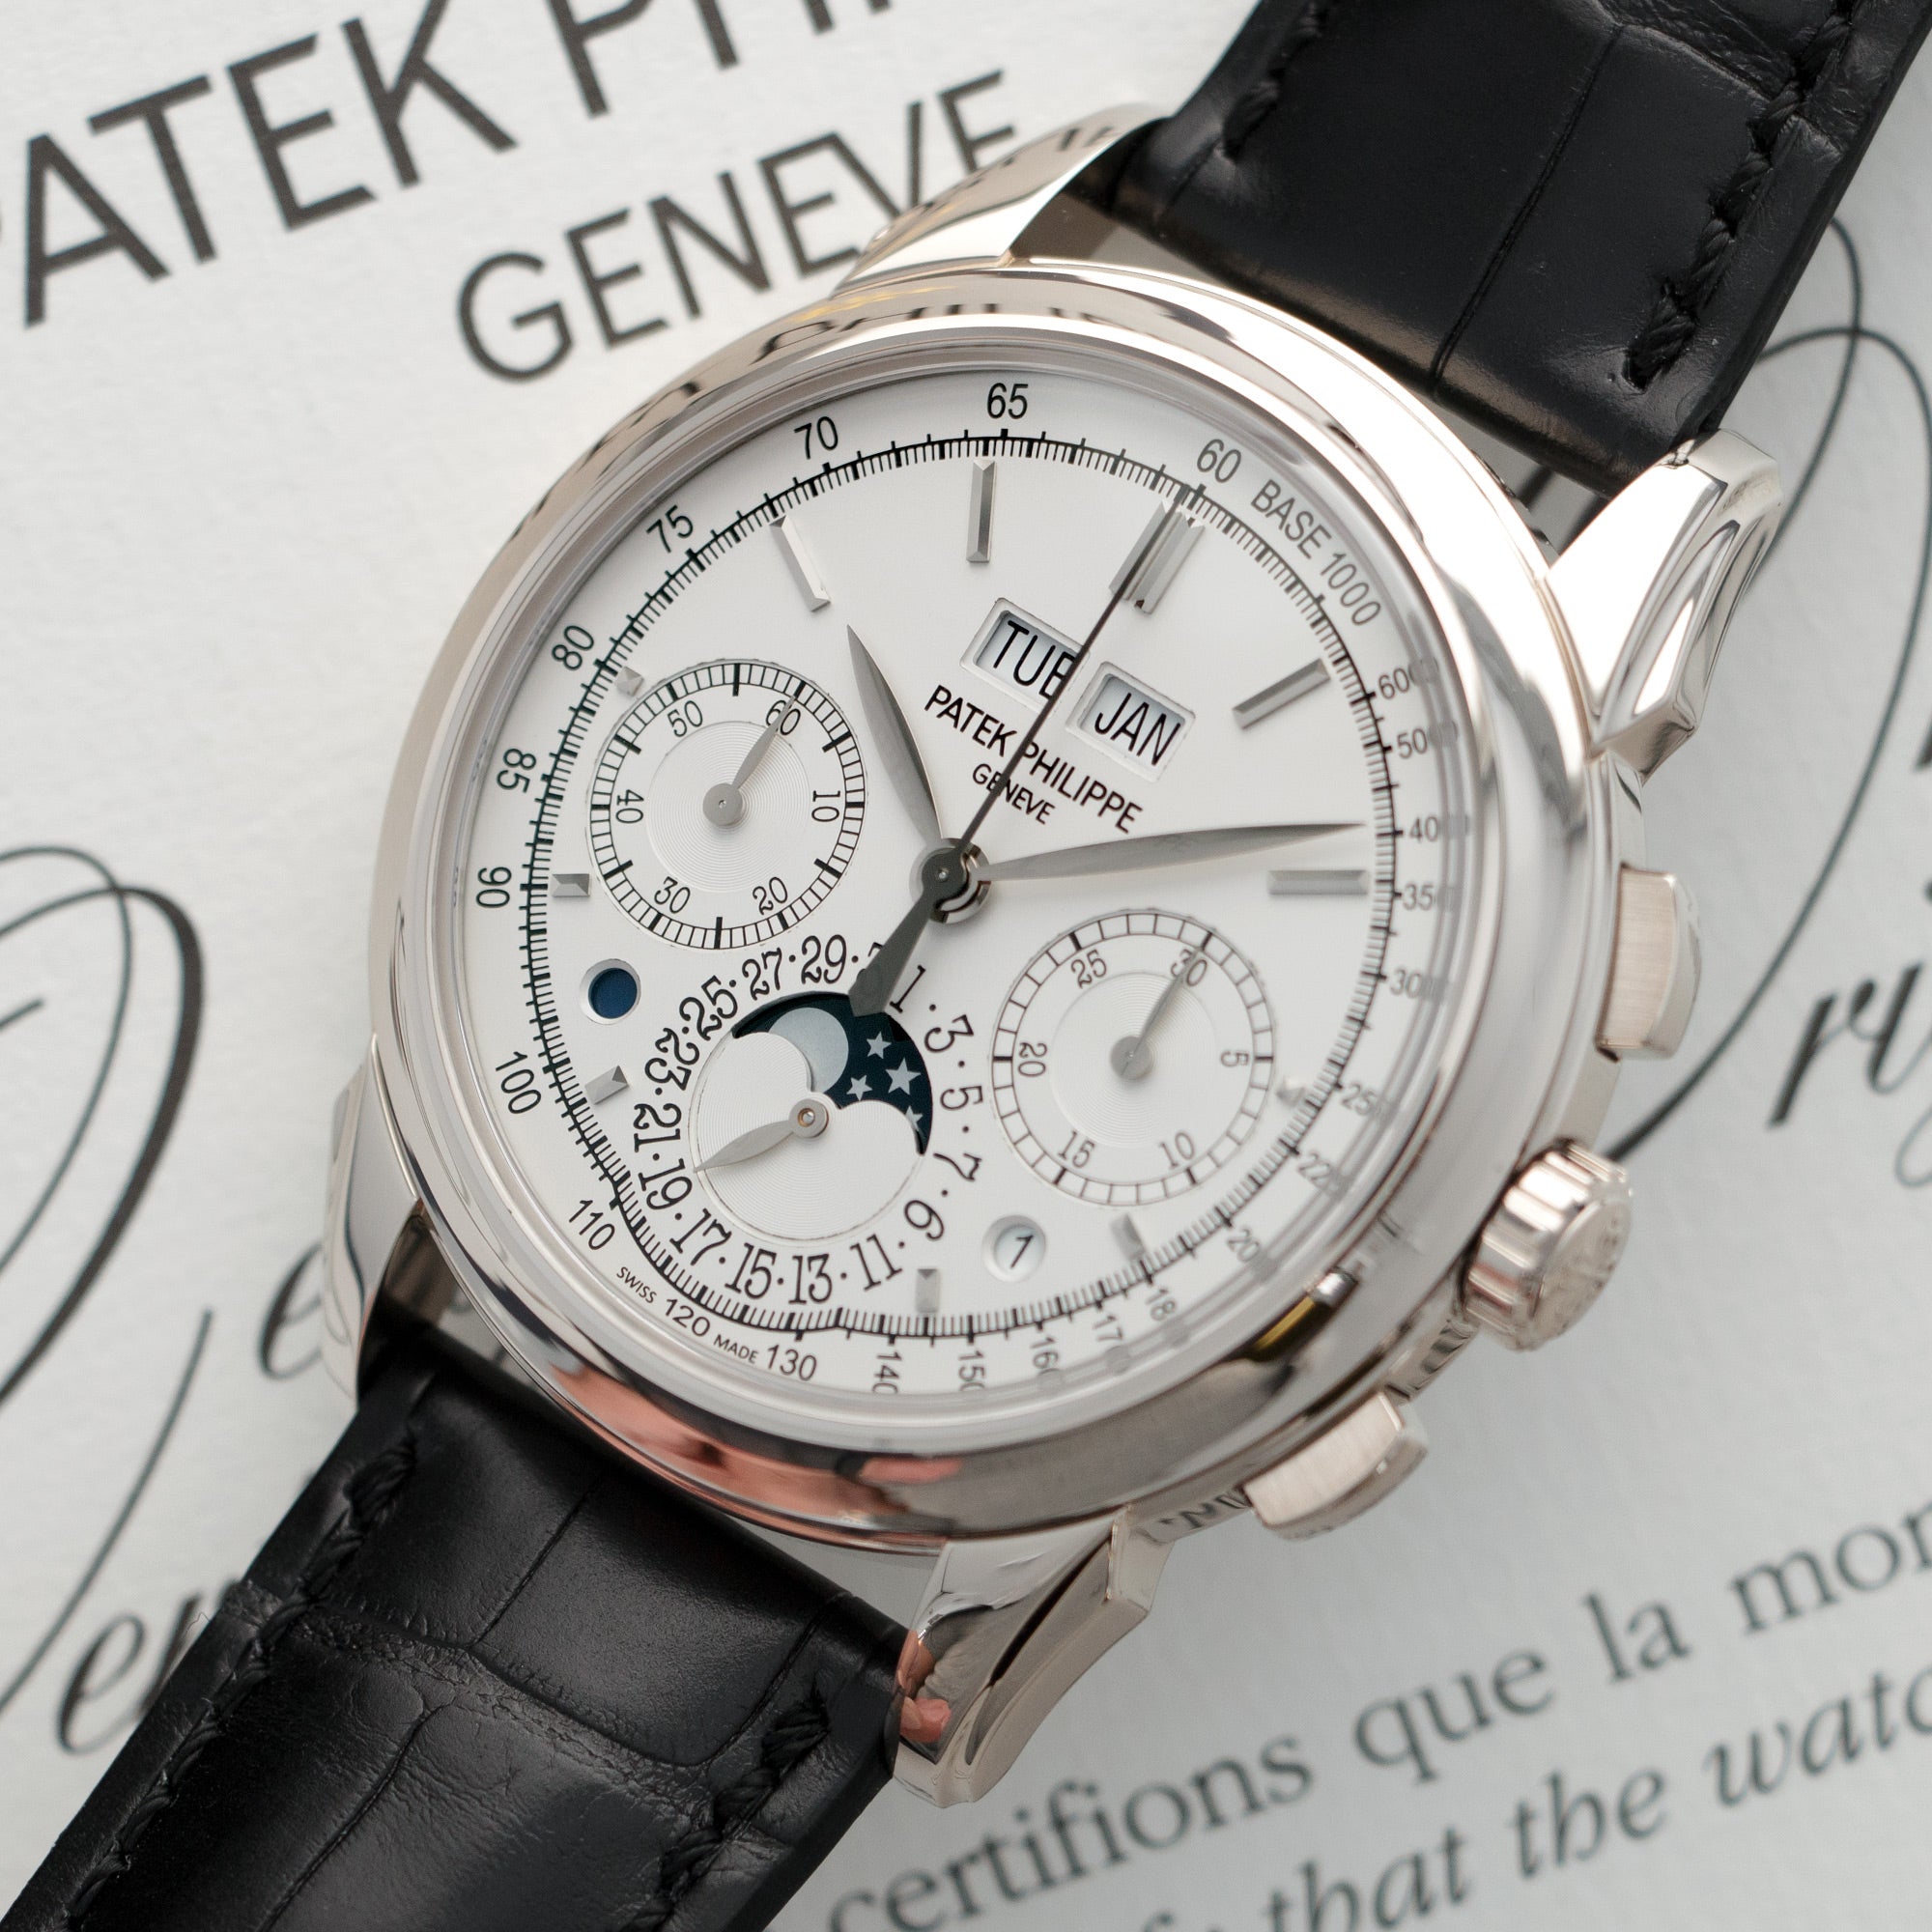 Patek Philippe Perp Cal Chrono 5270G-013 18k WG – The Keystone Watches